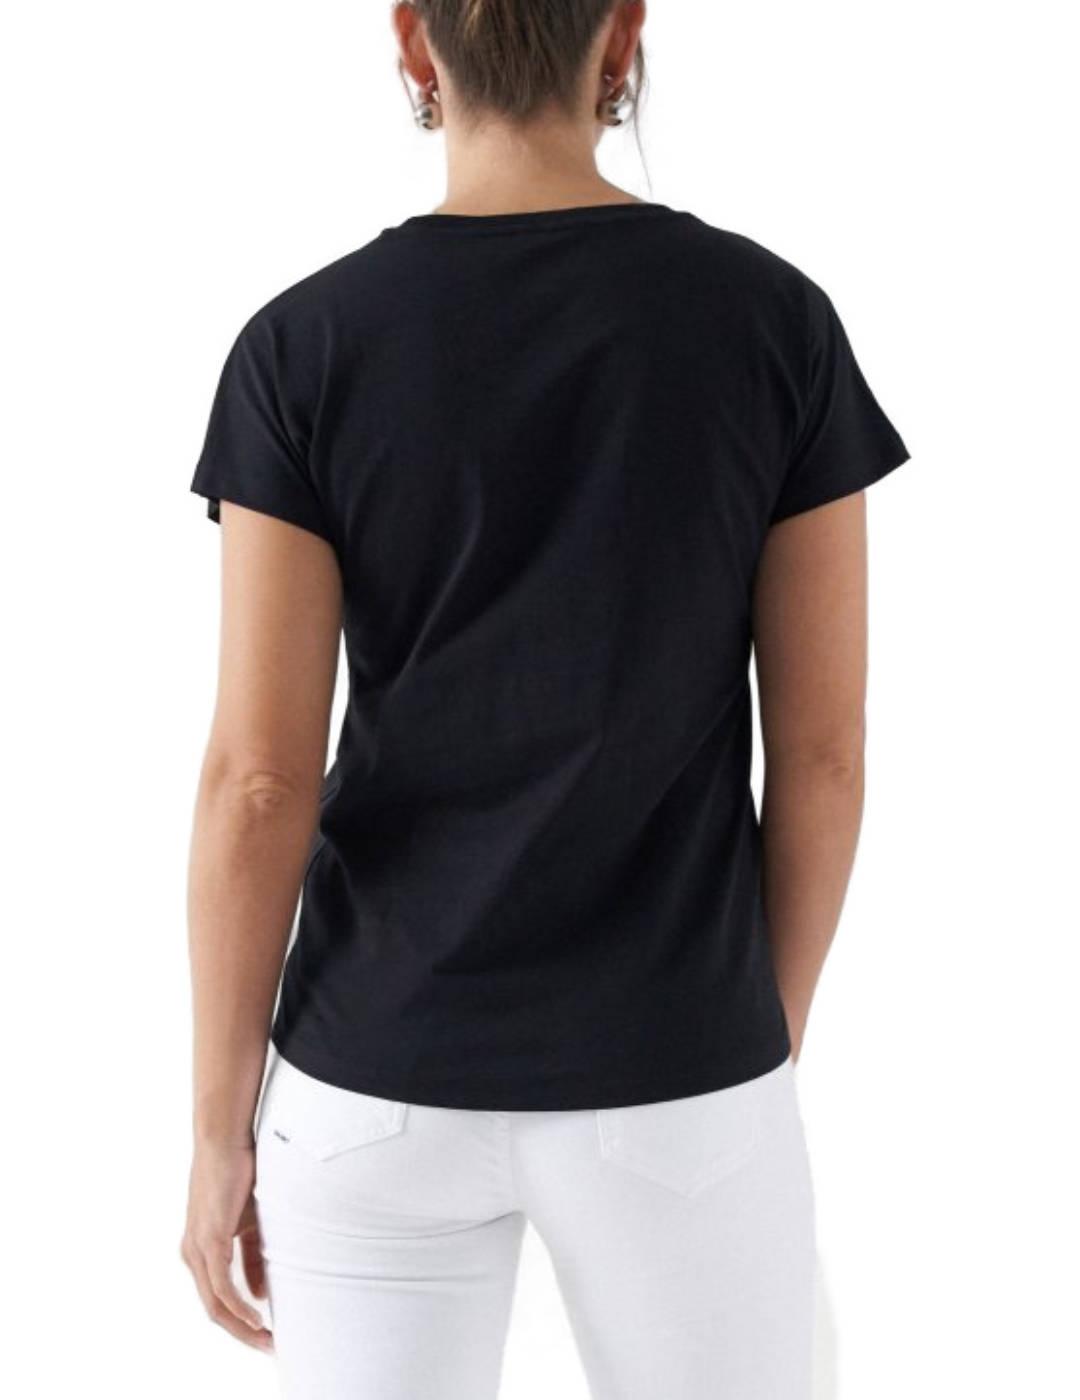 Camiseta Salsa negra logo trenzado manga corta de mujer